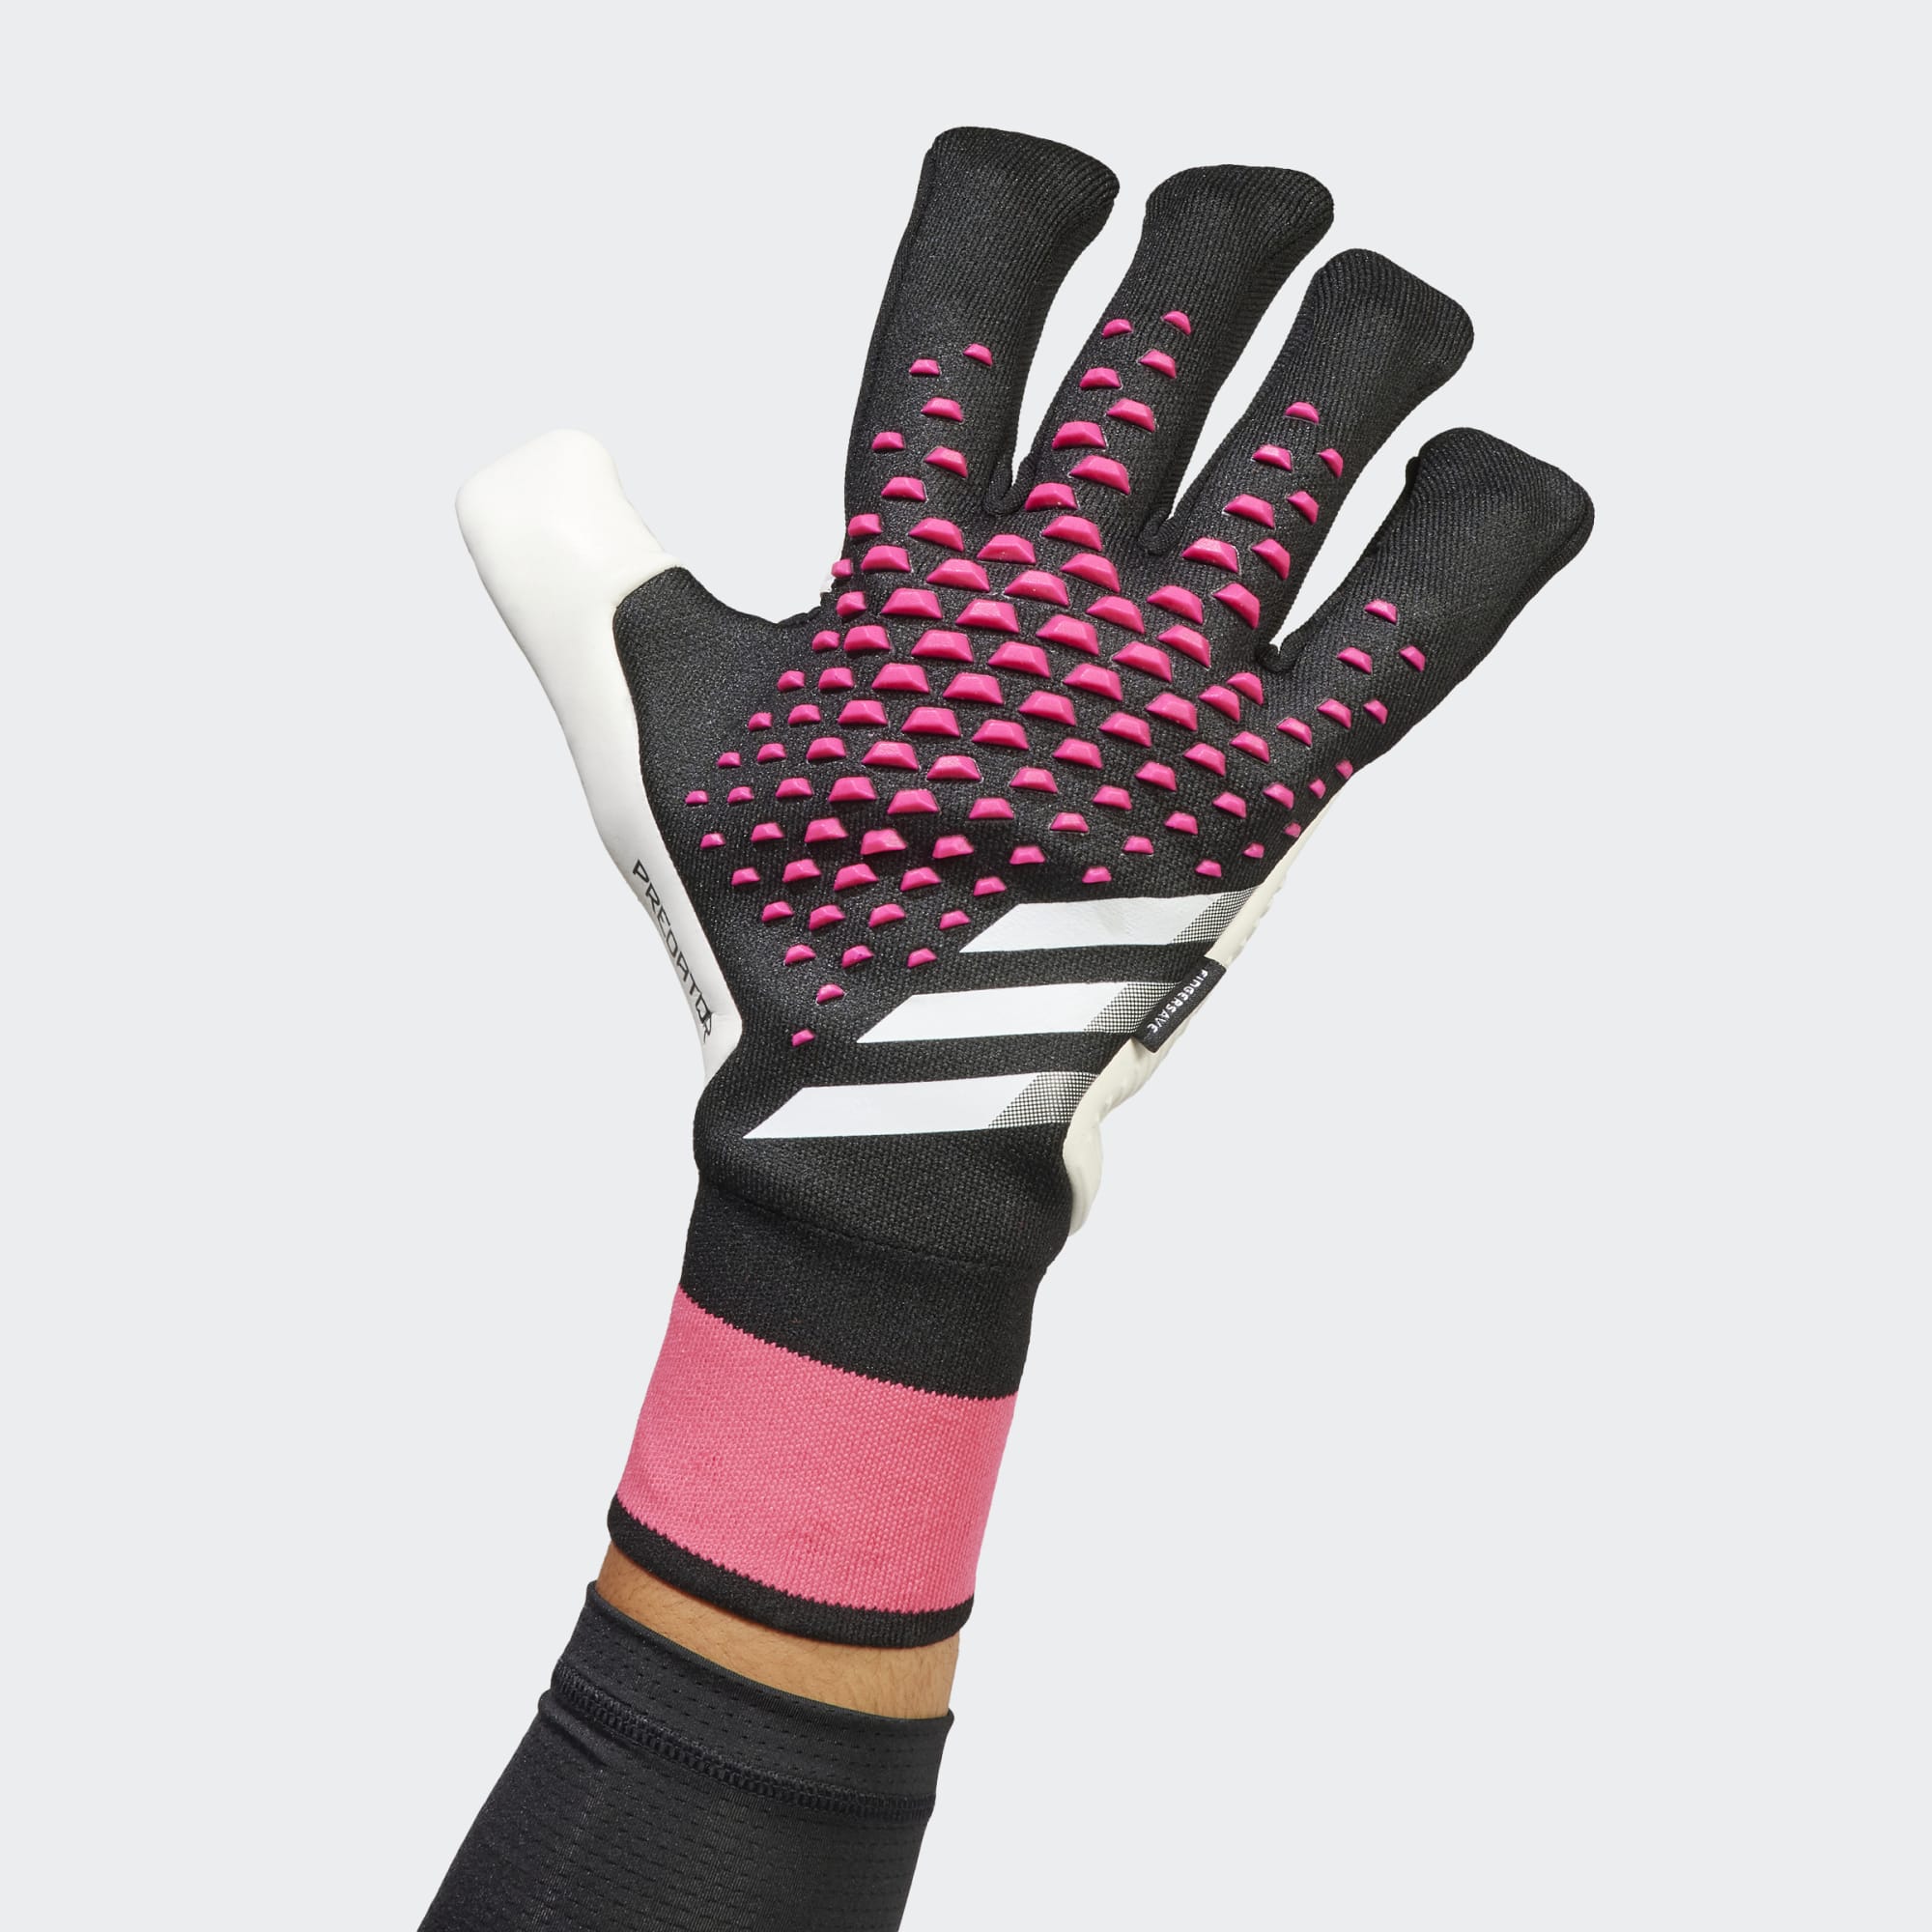 adidas Predator GL Pro Finger Save GK Glove - Black / Pink